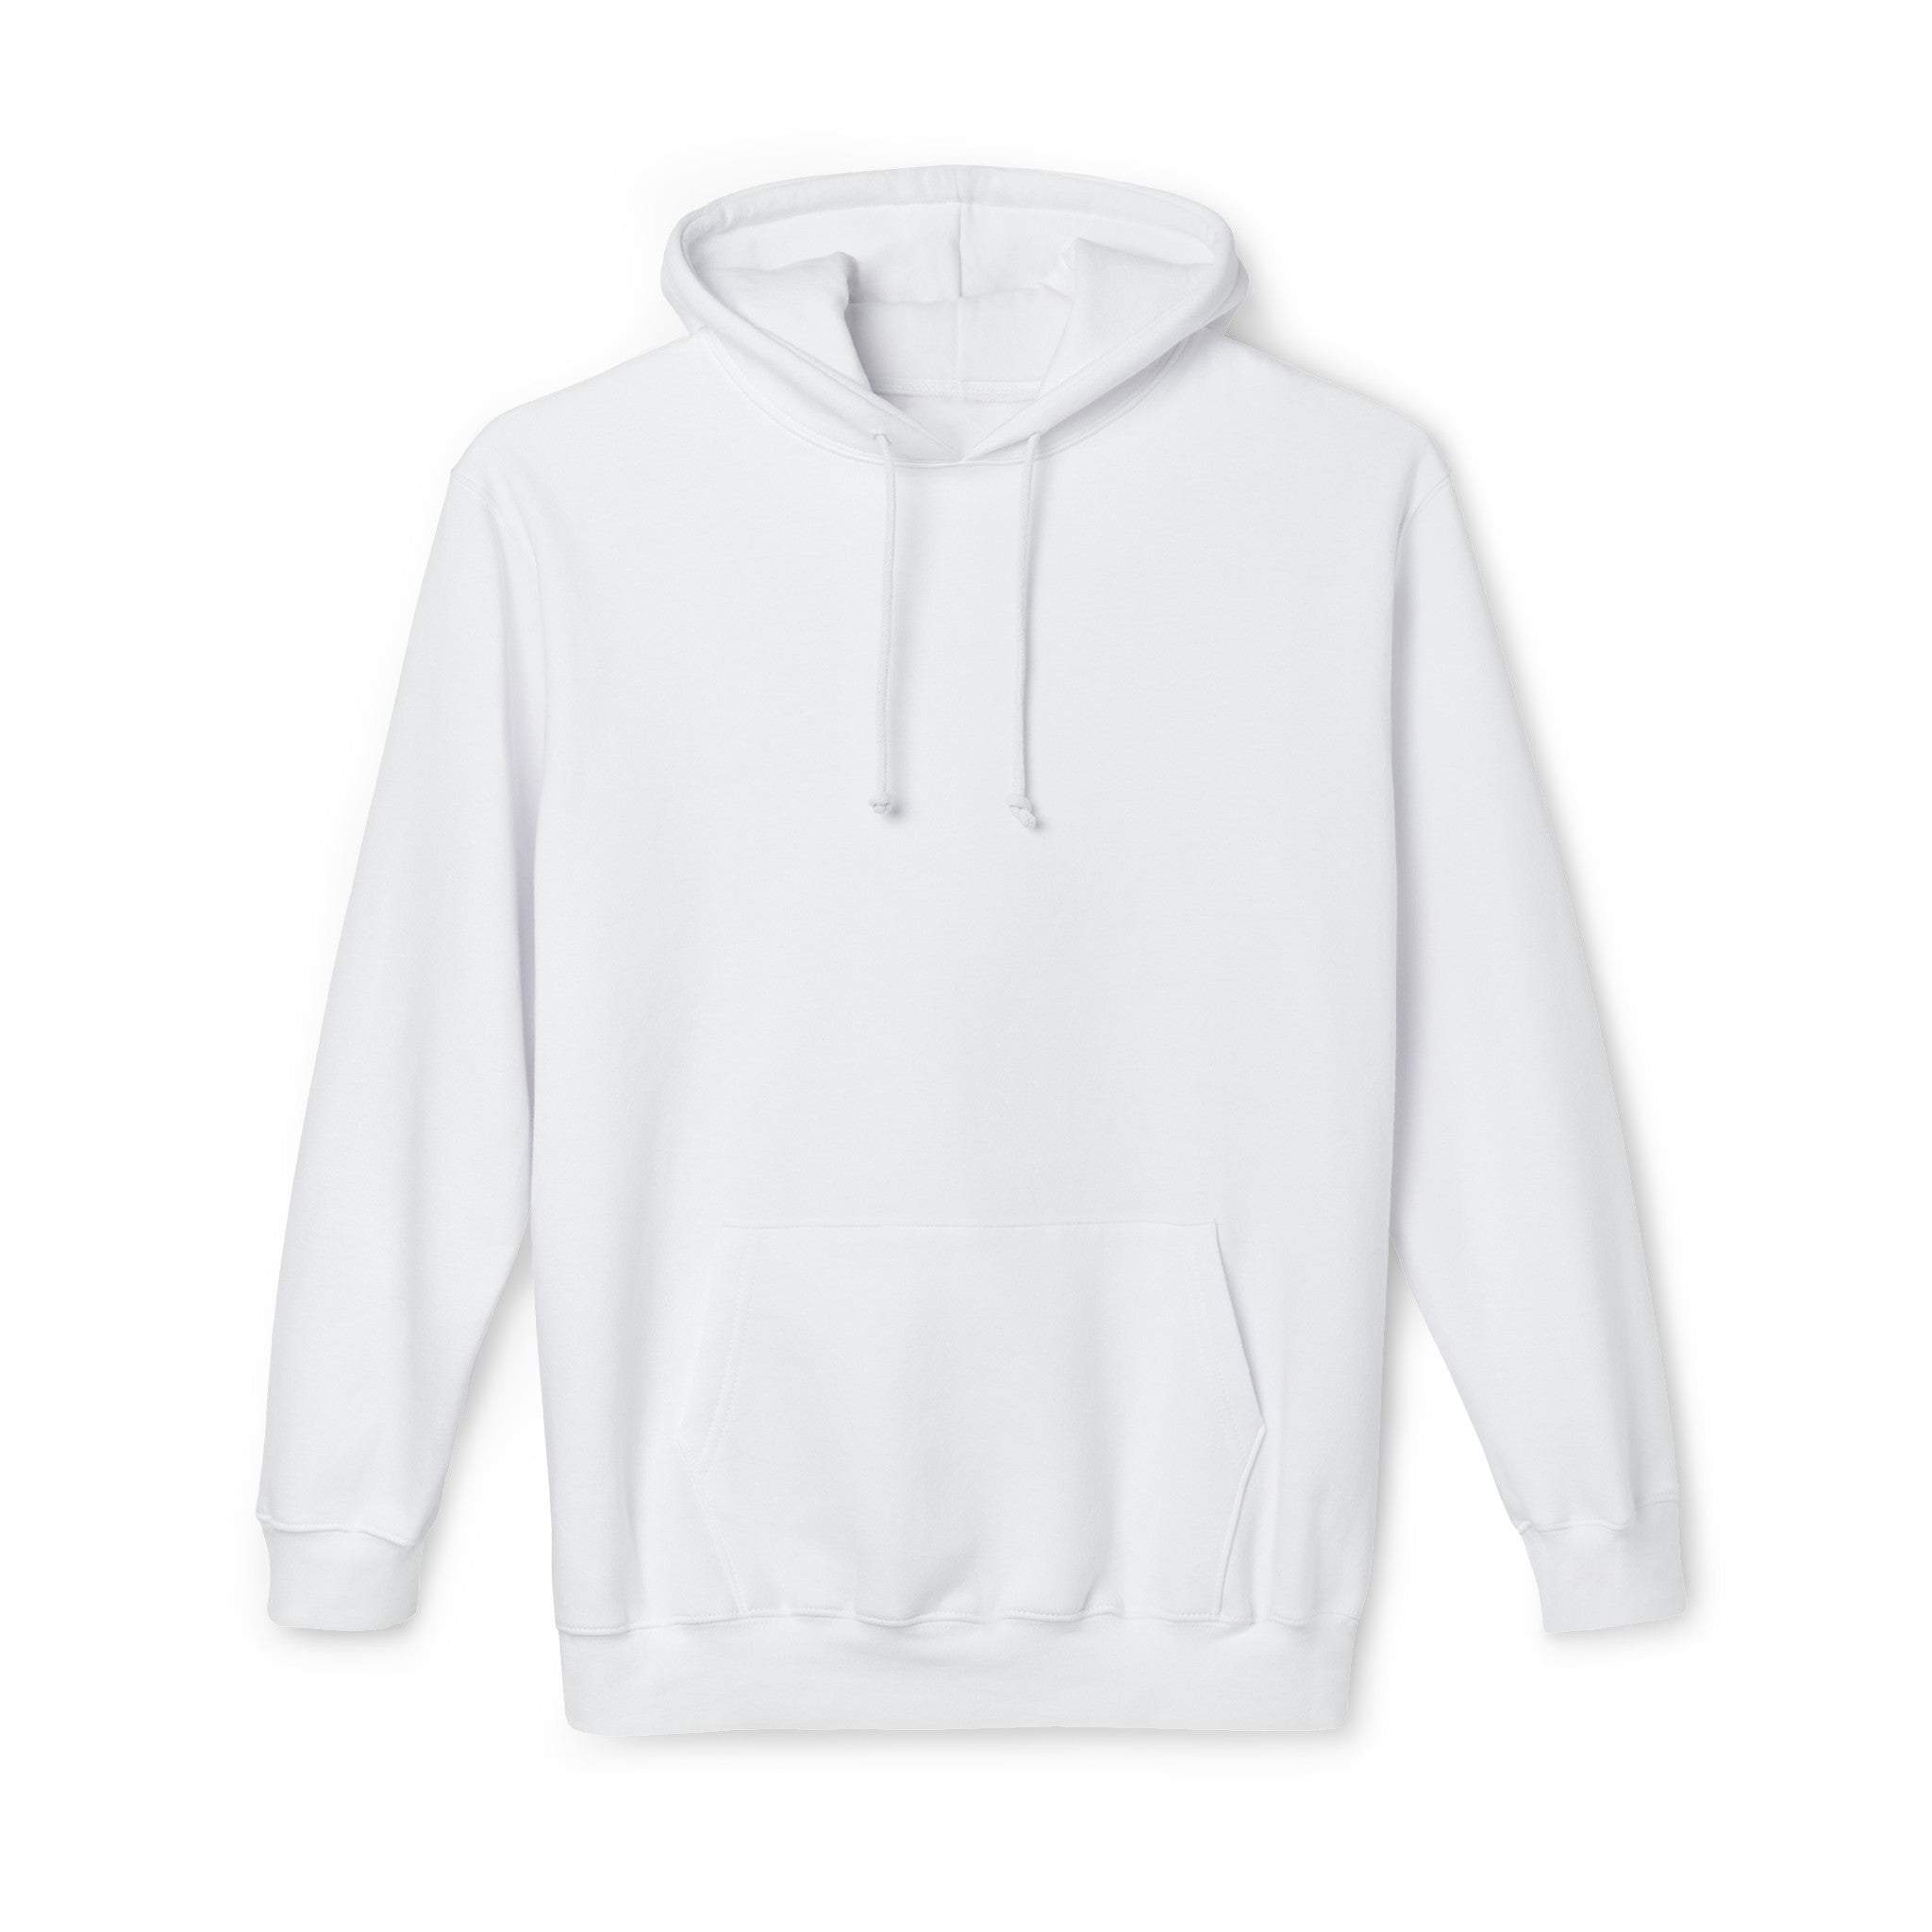 East/Sleep/Drive/Repeat Unisex Hooded Sweatshirt